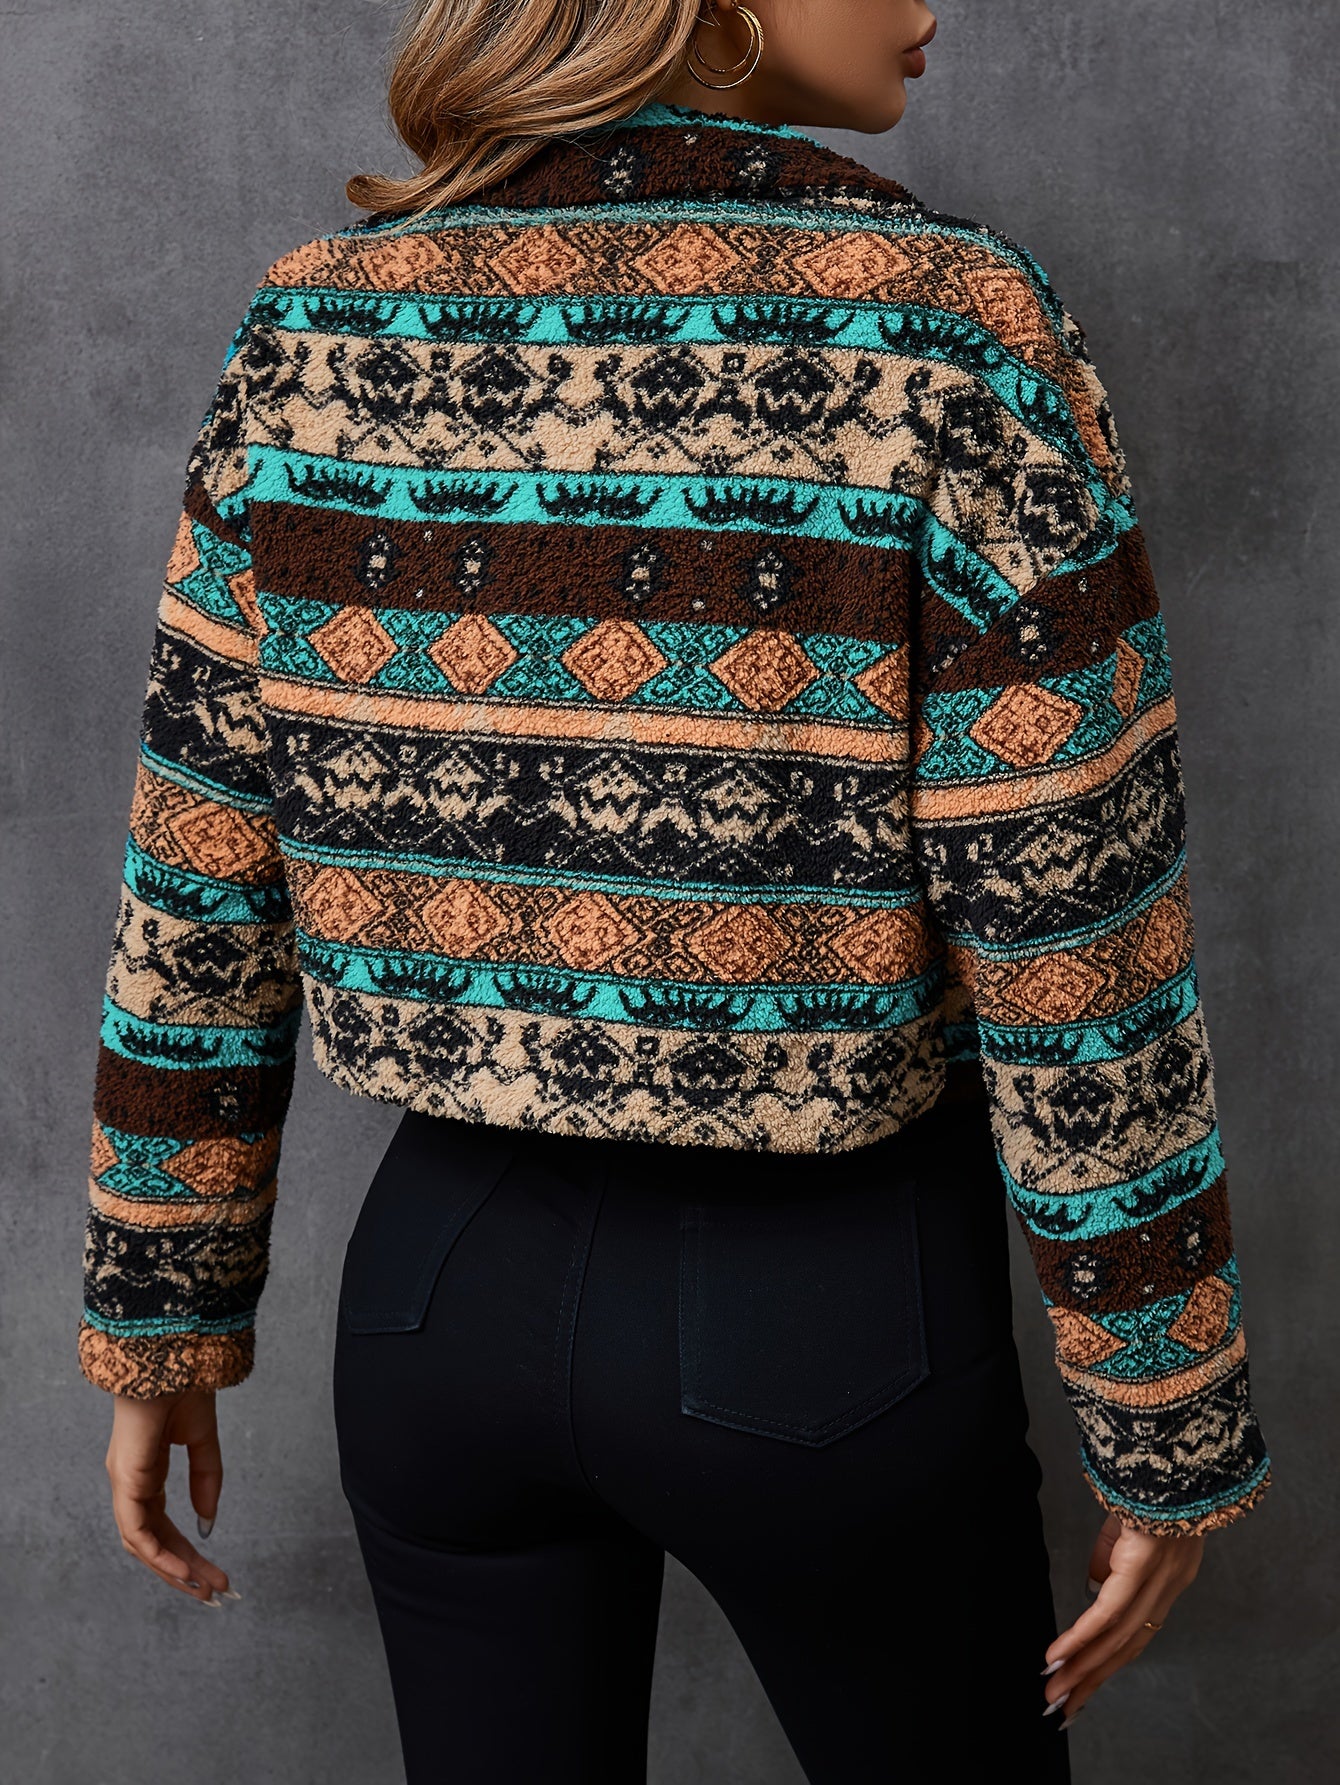 Antmvs Tribal Pattern Single Breasted Jacket, Vintage Long Sleeve Warm Outwear For Fall & Winter, Women's Clothing